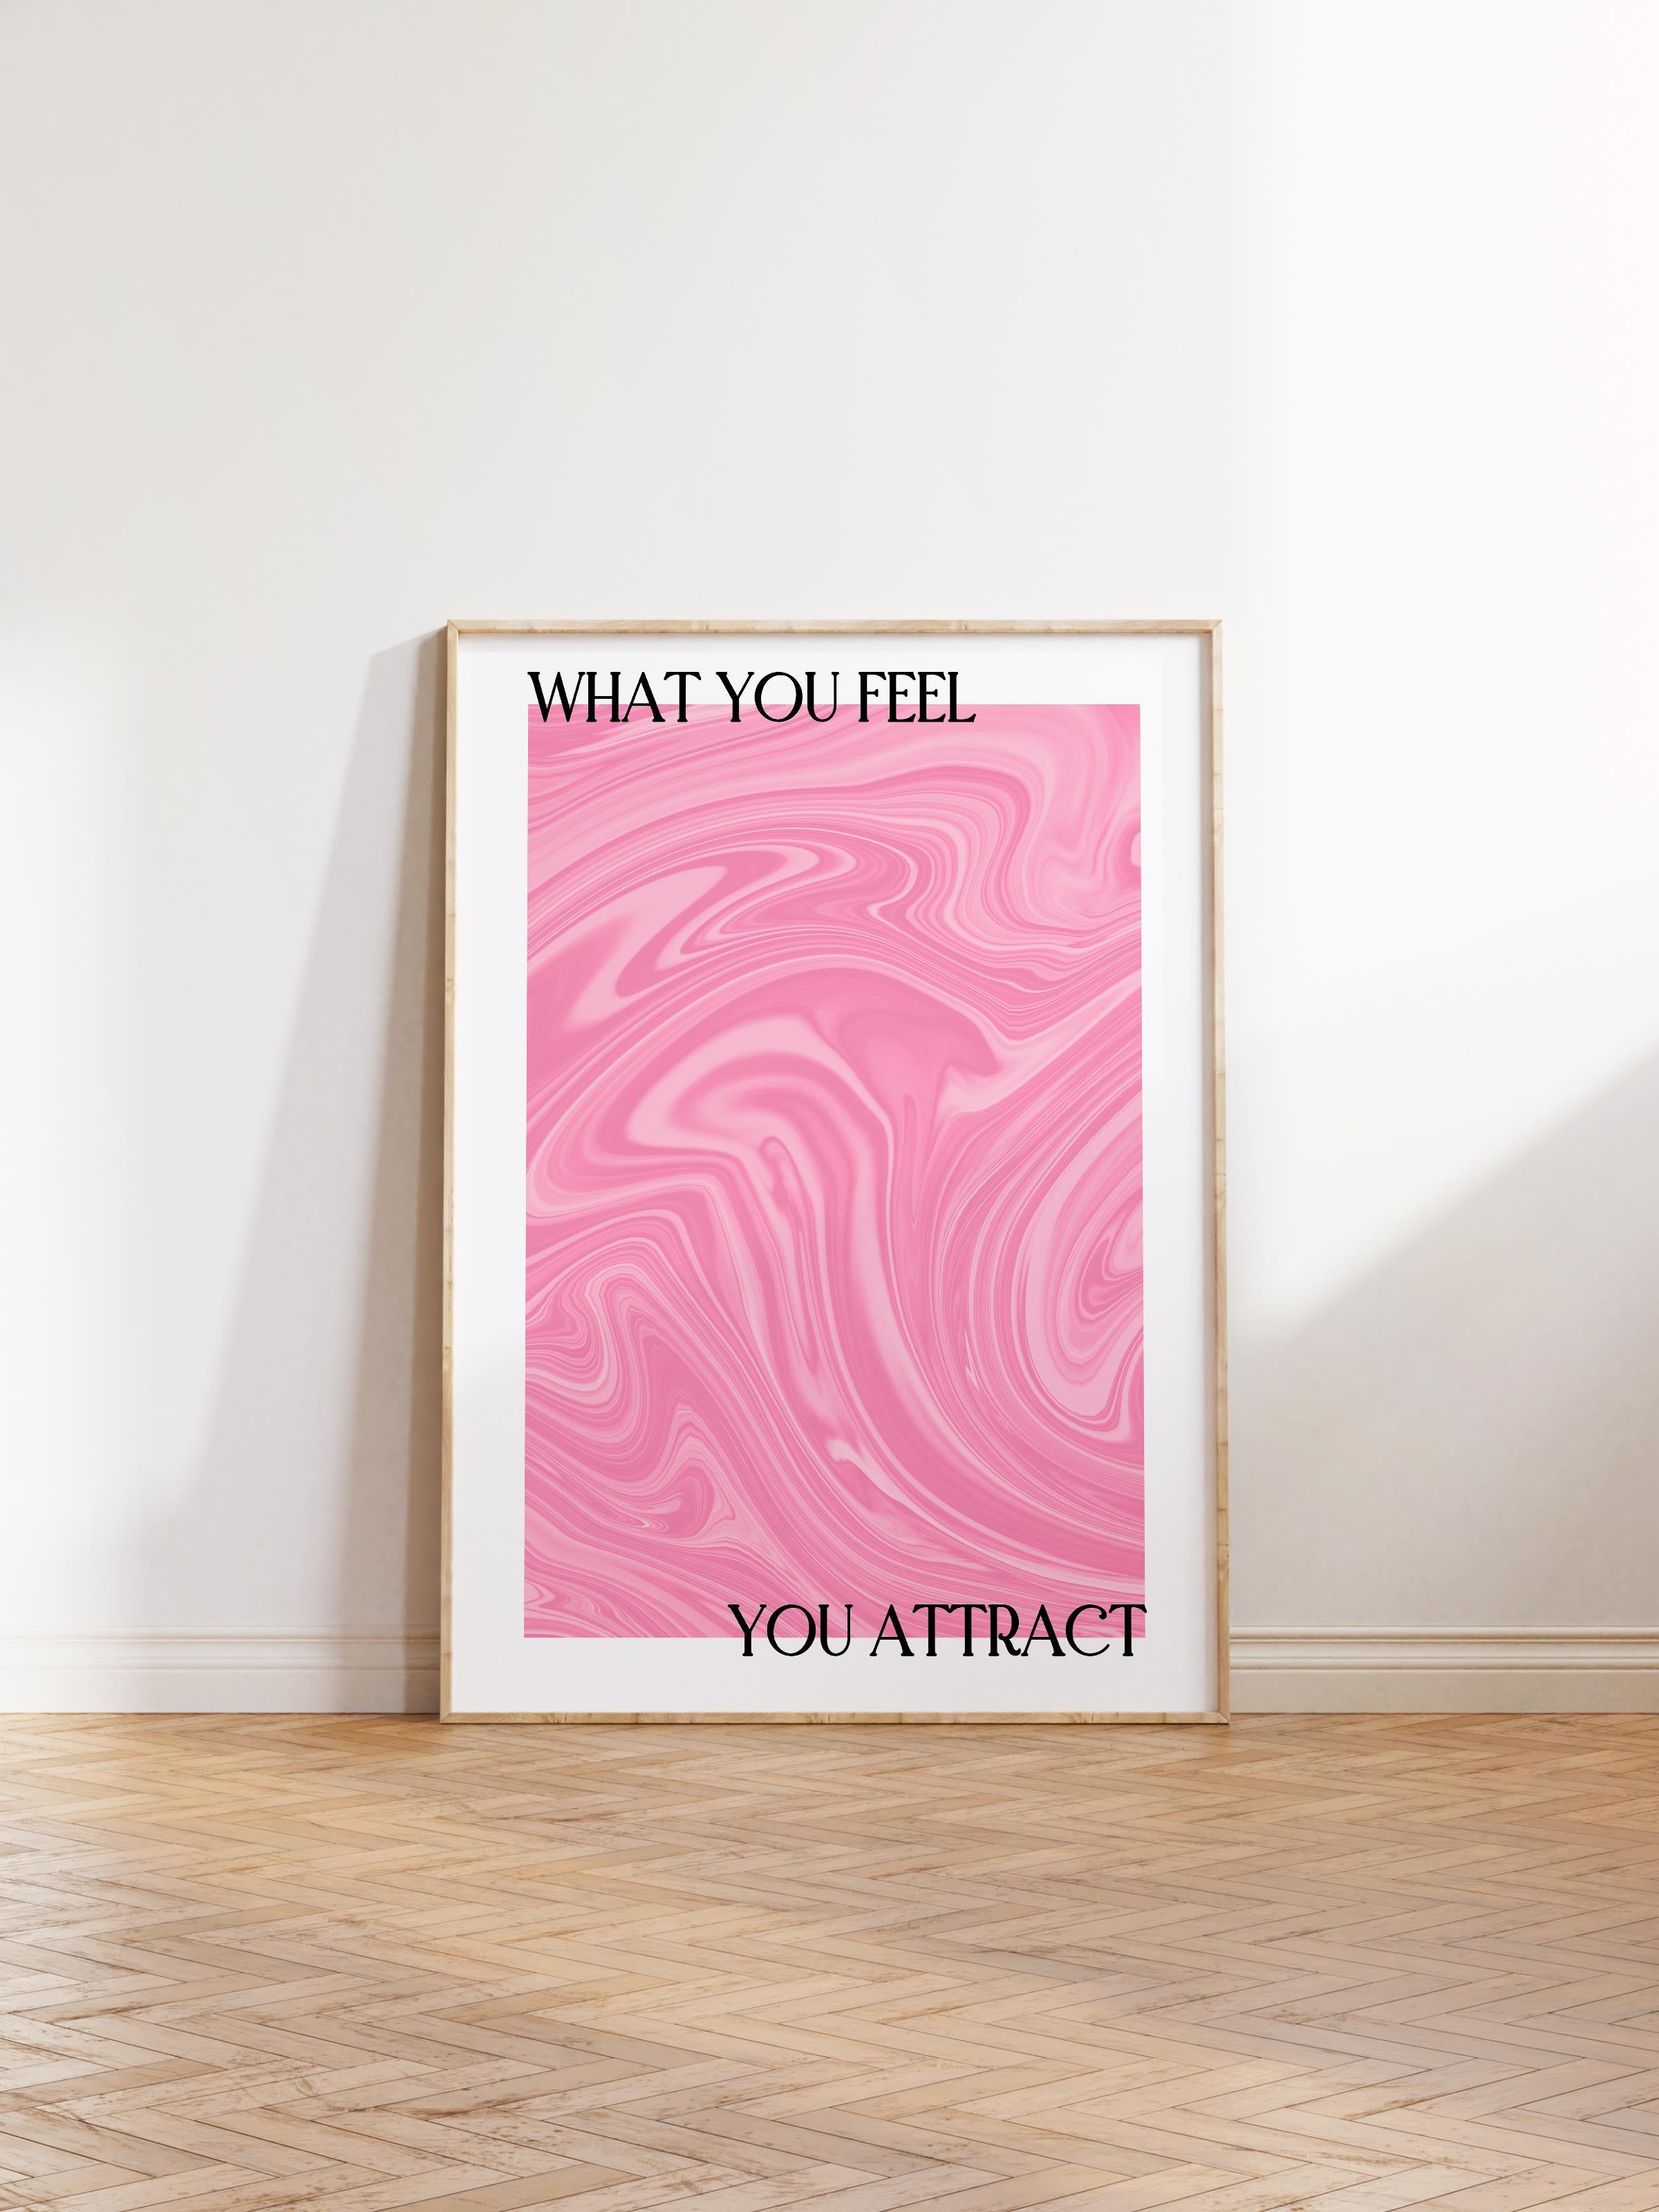 Çerçevesiz Poster, Aura Serisi NO:33 - What You Feel, You Attract, Melek Numaraları, Renkli Poster